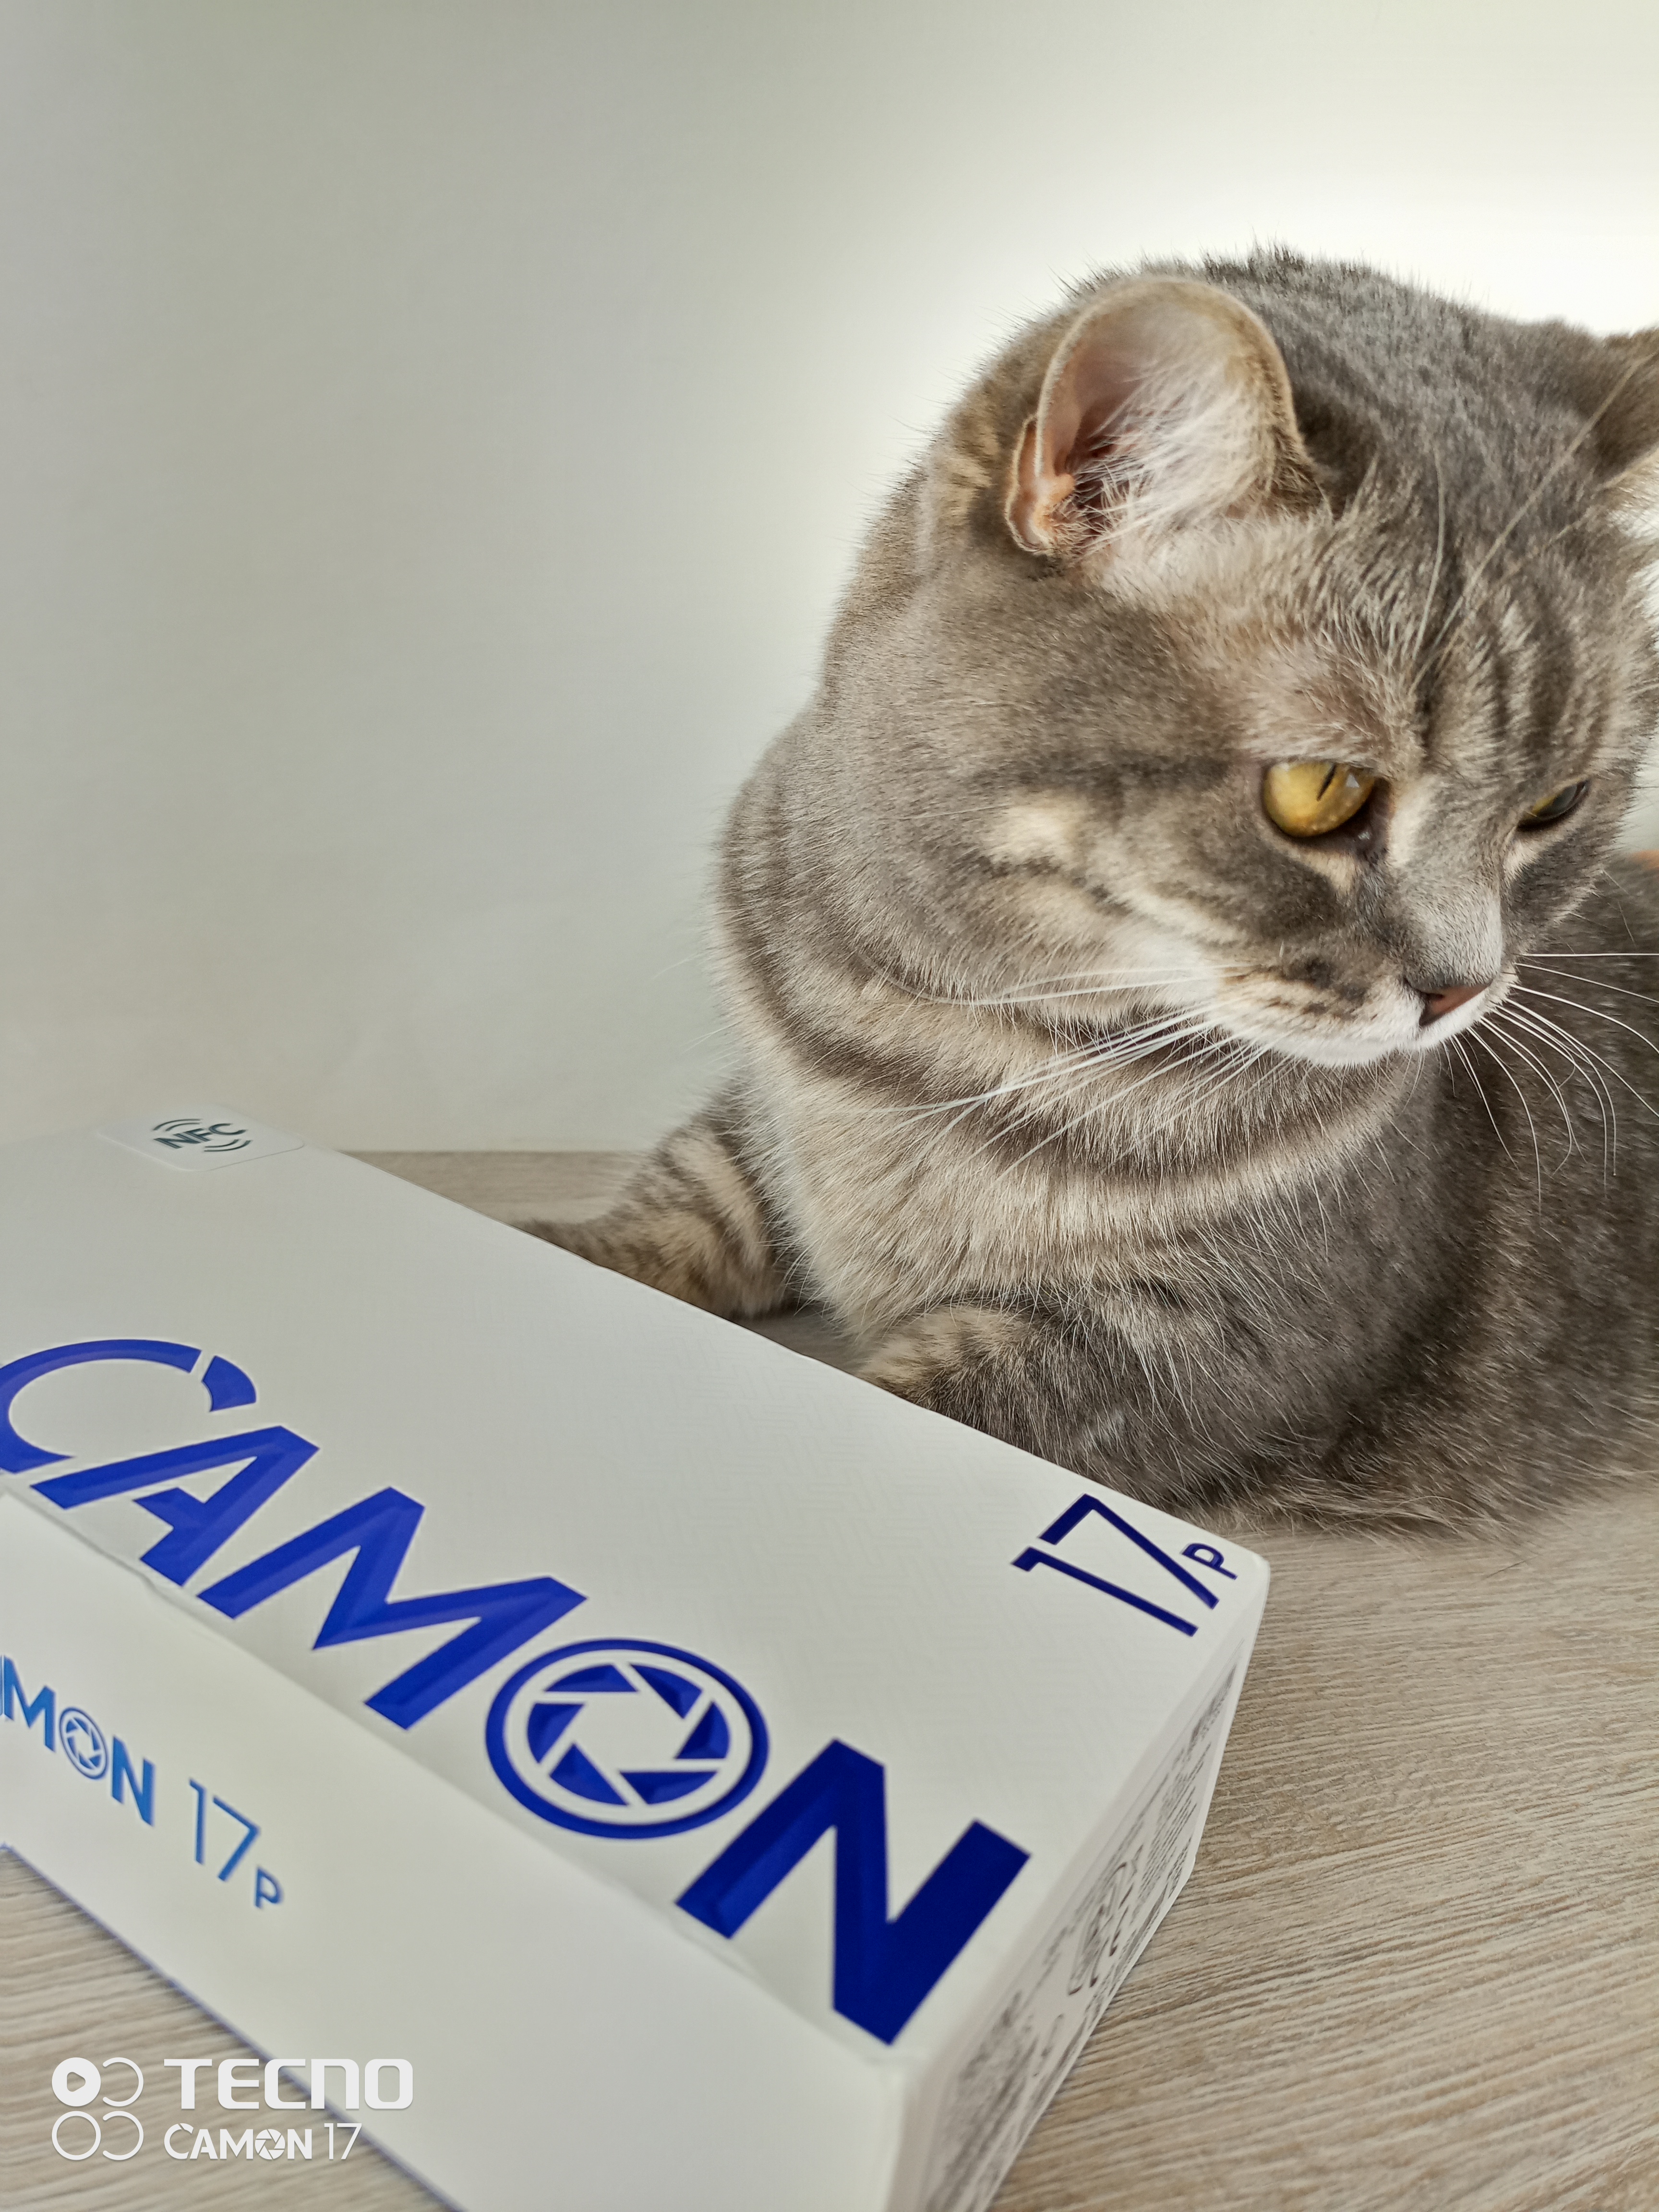 Tecno Camon 17P Review - Xiaomi, Move over! ⋆ 14